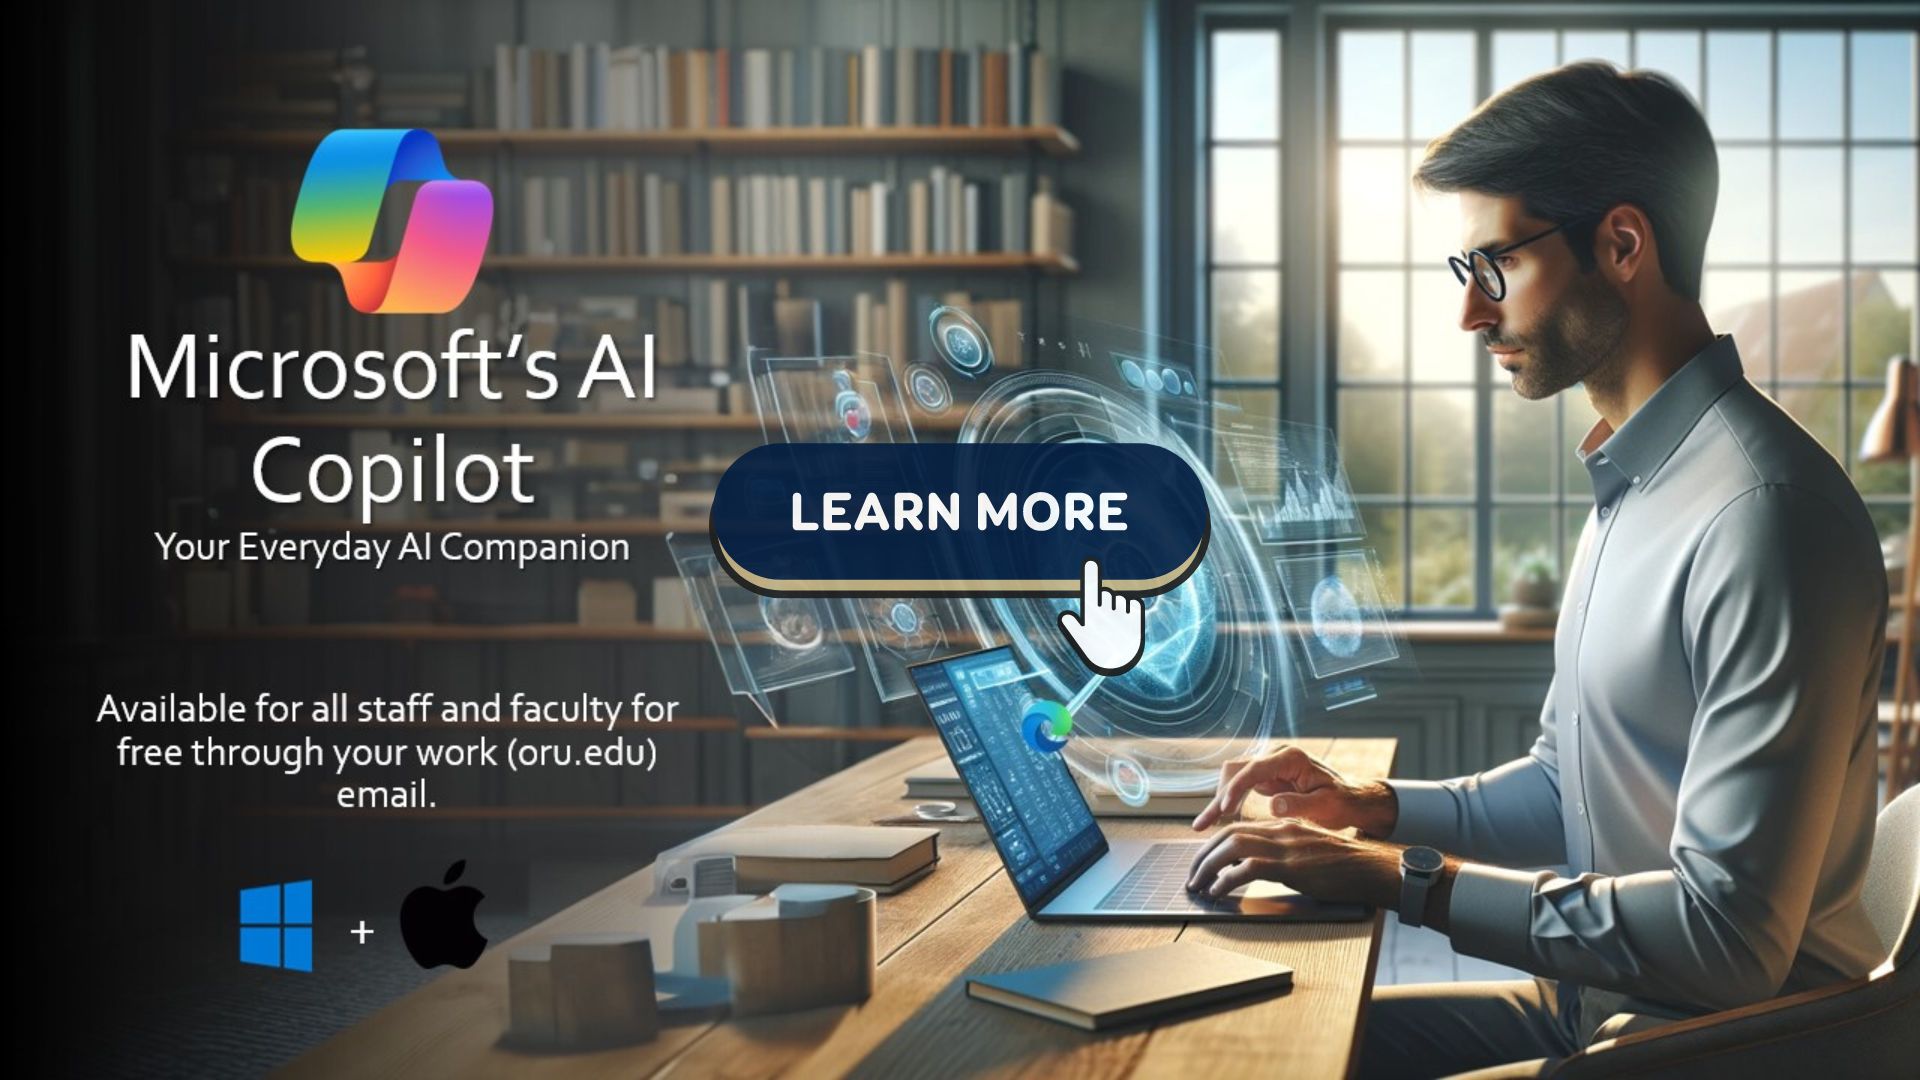 Microsoft-Copilot-Learn-More.jpg